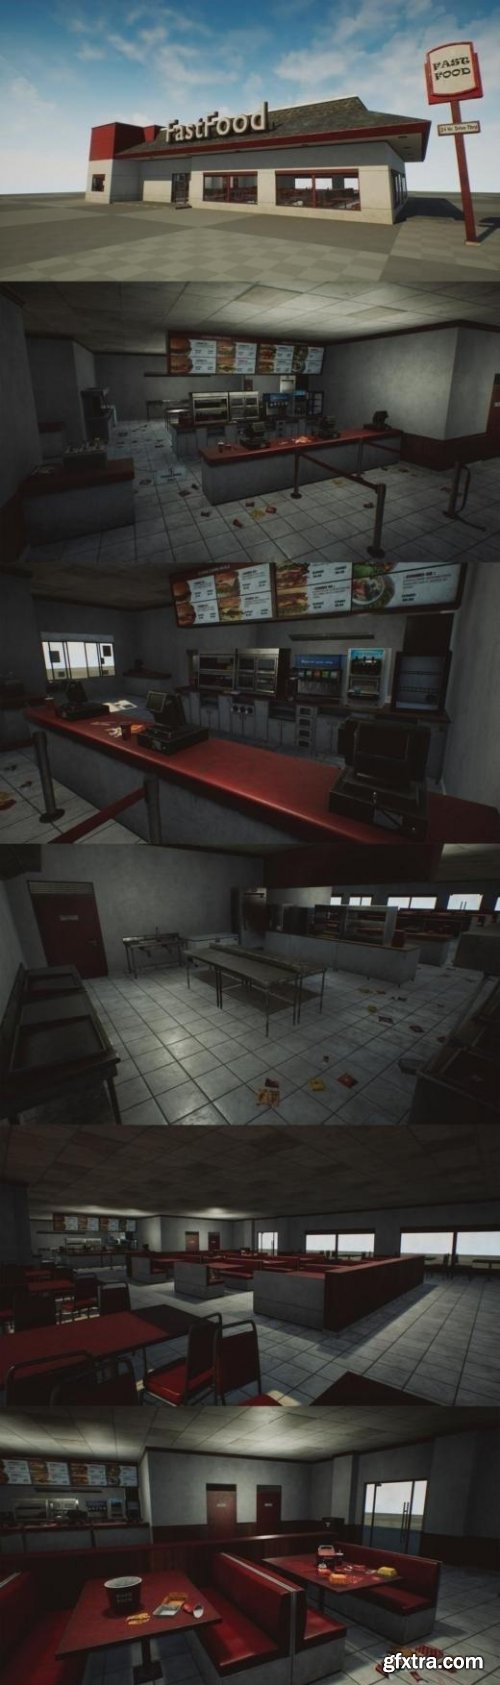 Unreal Engine – Abandoned Fast Food Building